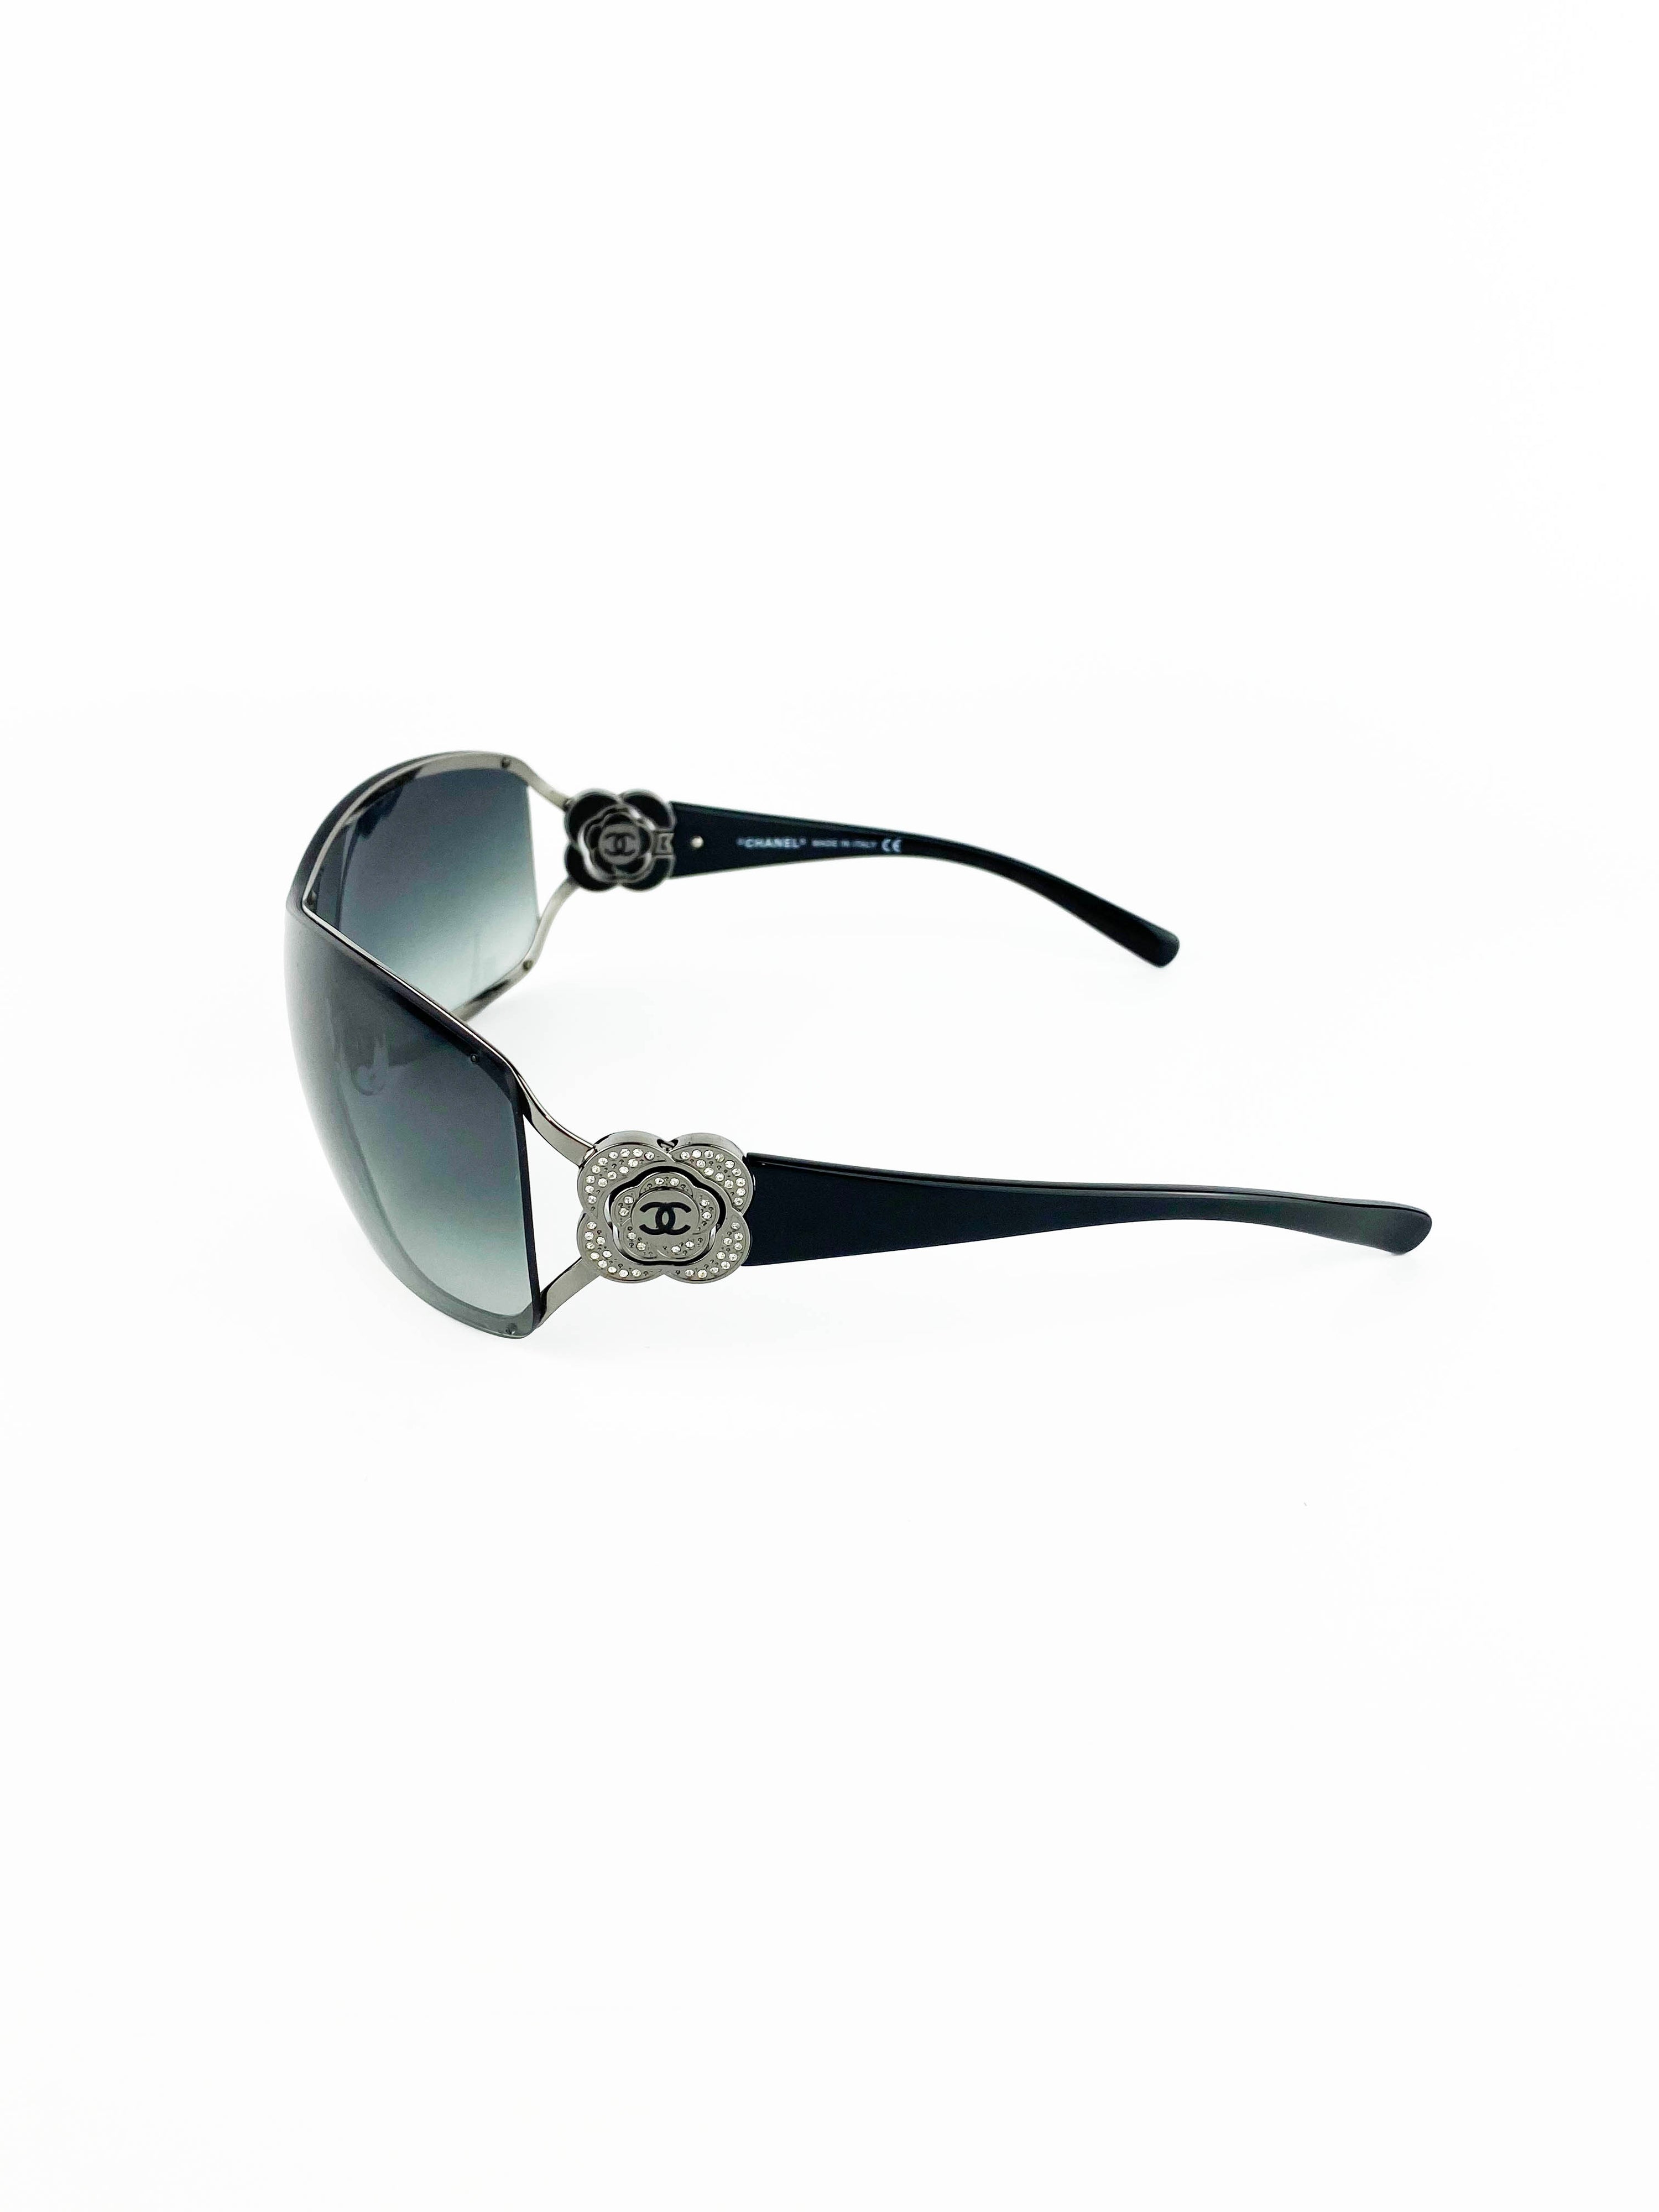 Chanel Black 4164-B Sunglasses